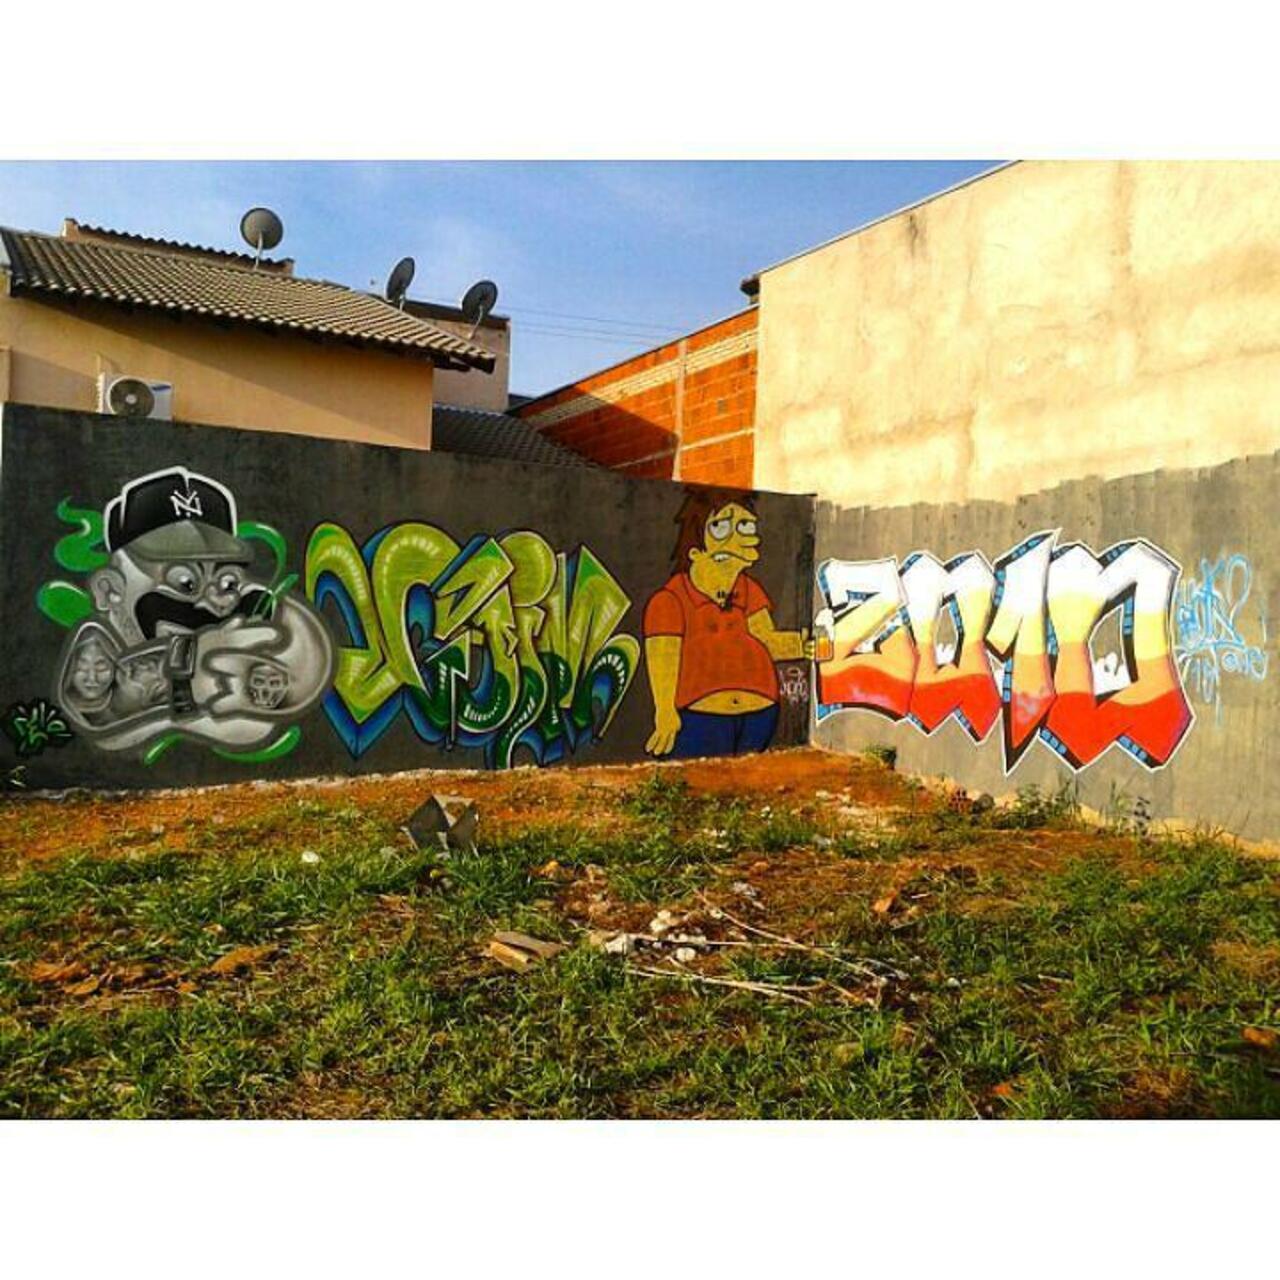 RT @artpushr: via #guimnomo "http://bit.ly/1FXFtEt" #graffiti #streetart http://t.co/ruOh0KWo6S